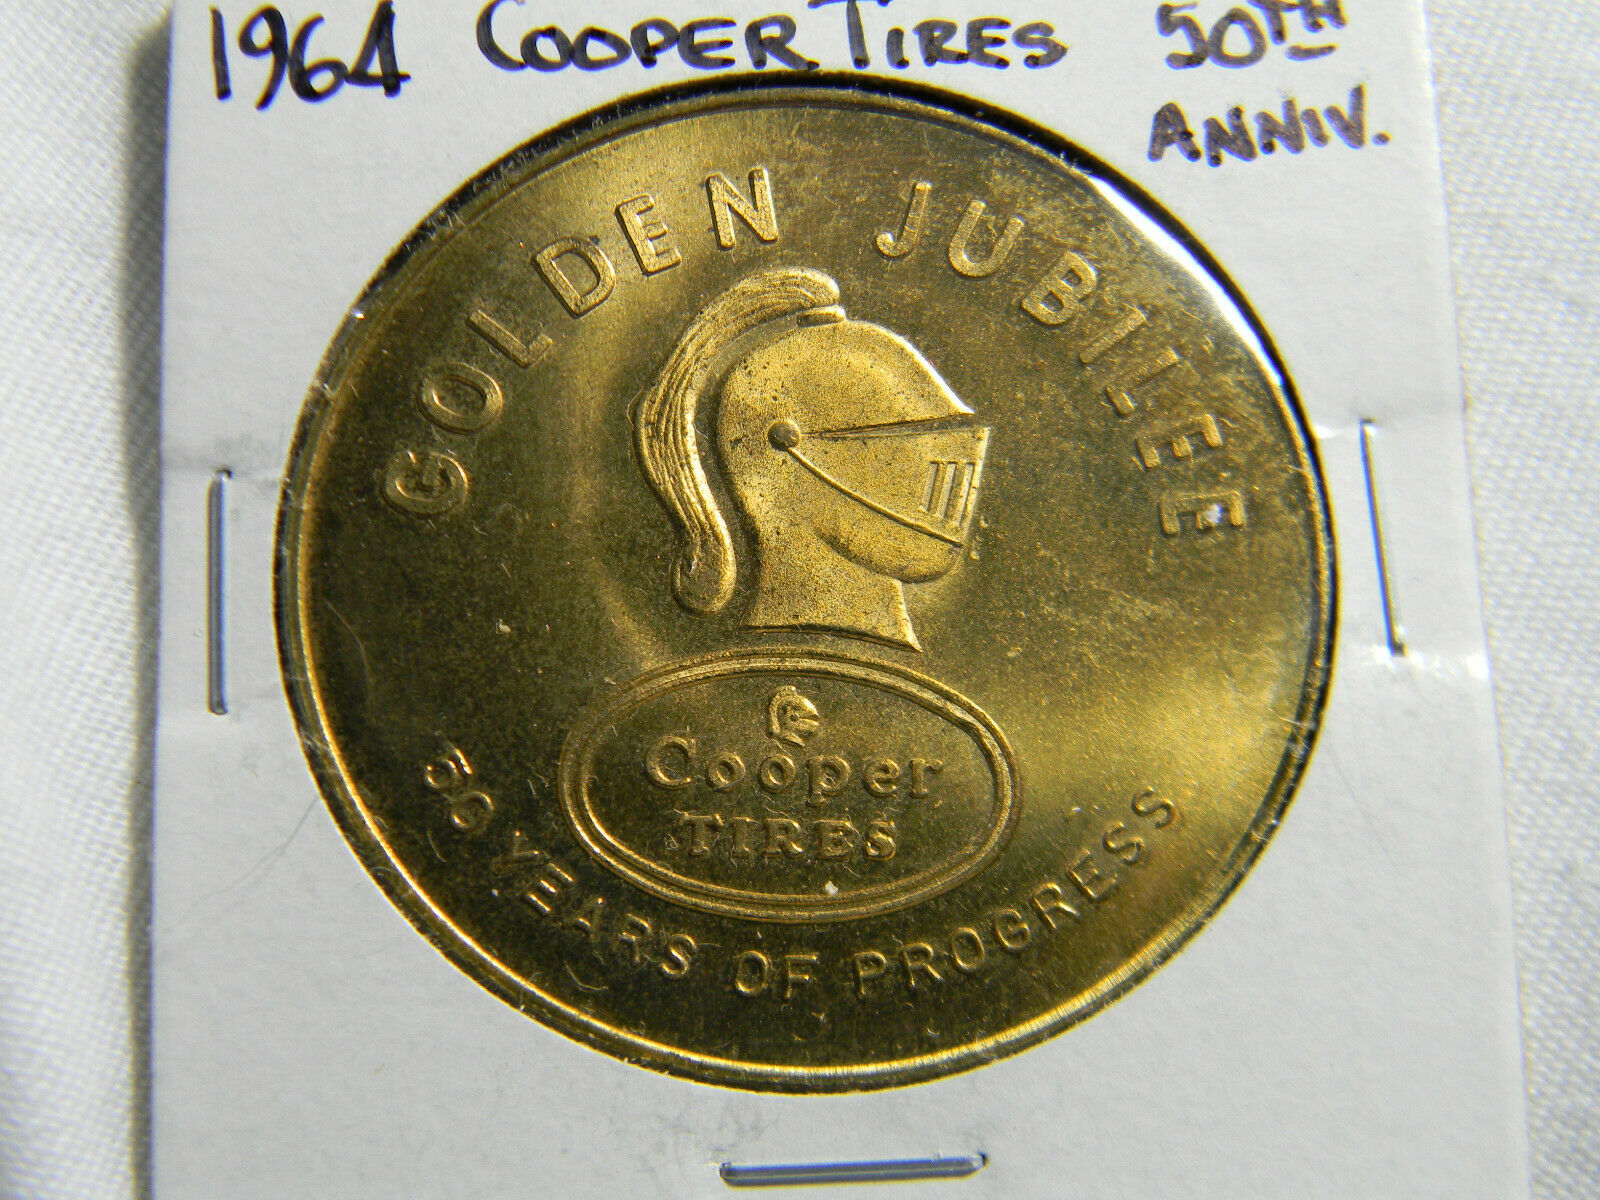 Usa 1964 Cooper Tires Medal (0200)